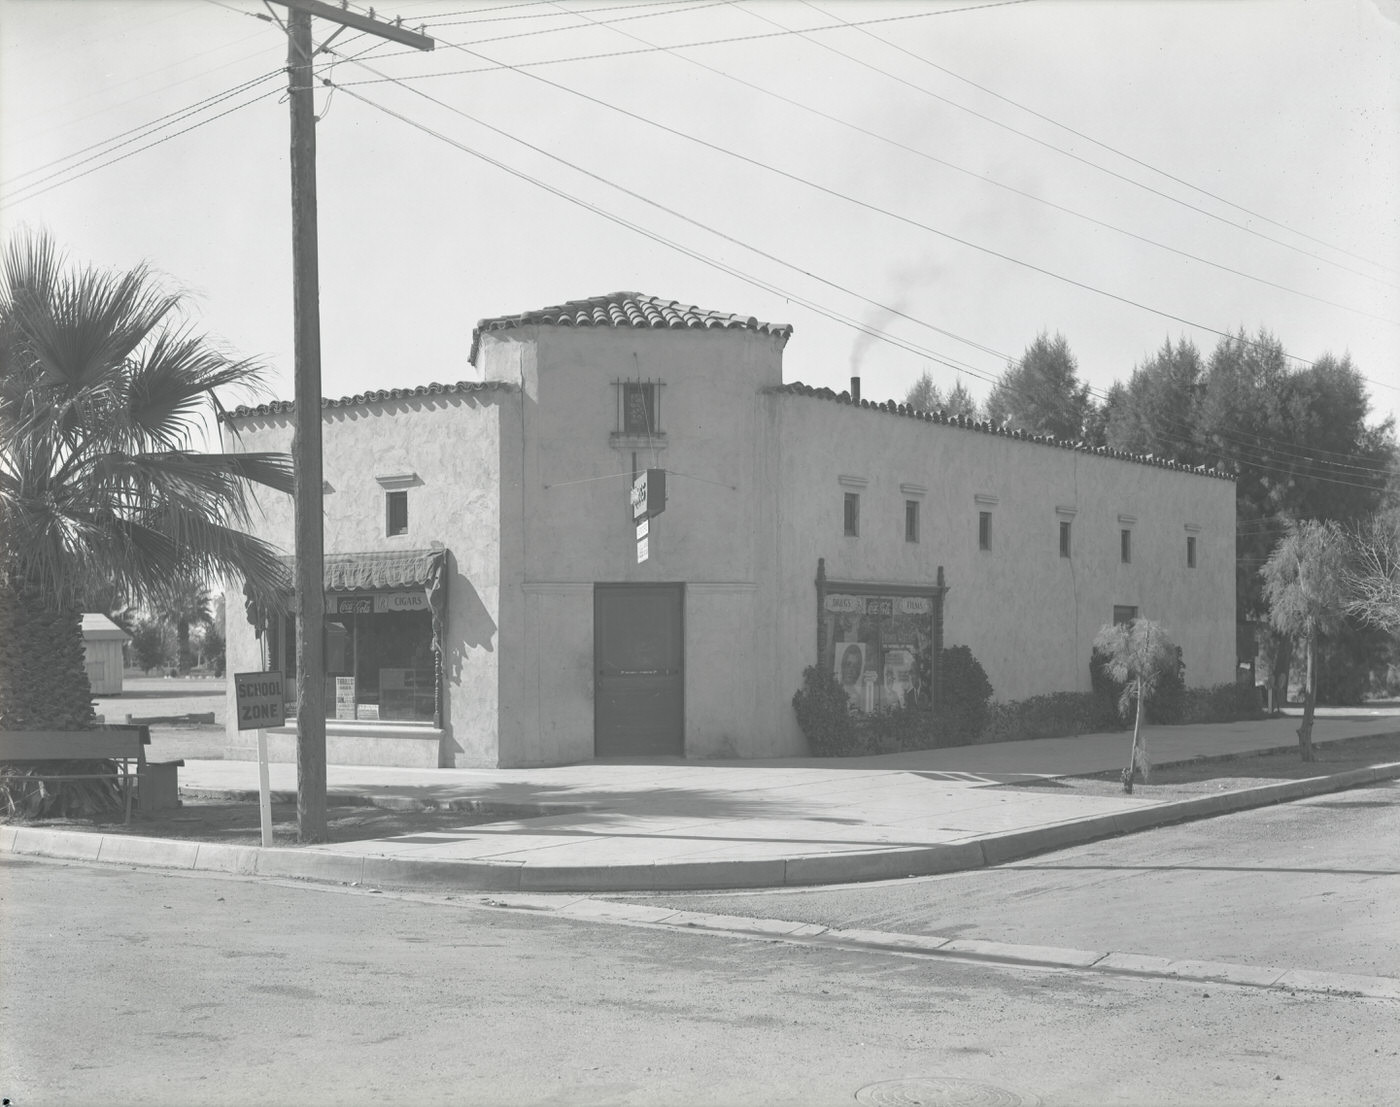 Litchfield Boulevard, 1930s